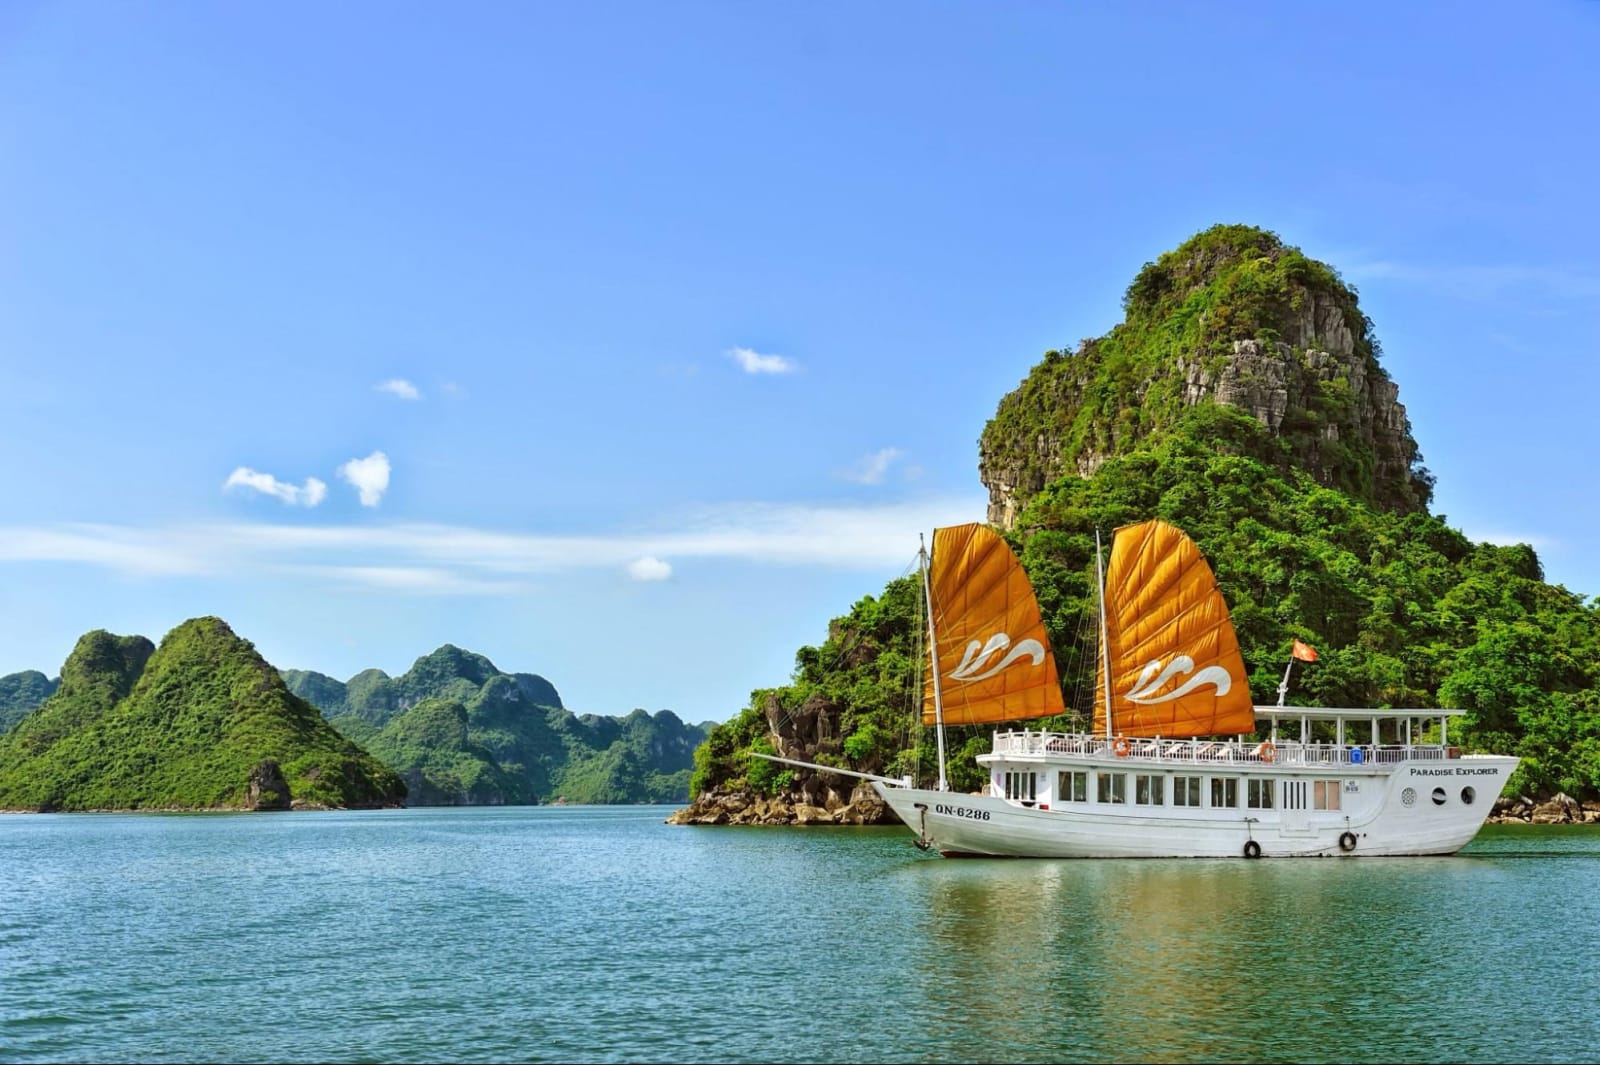 Halong Bay Cruise experience with Paradise Vietnam Cruises